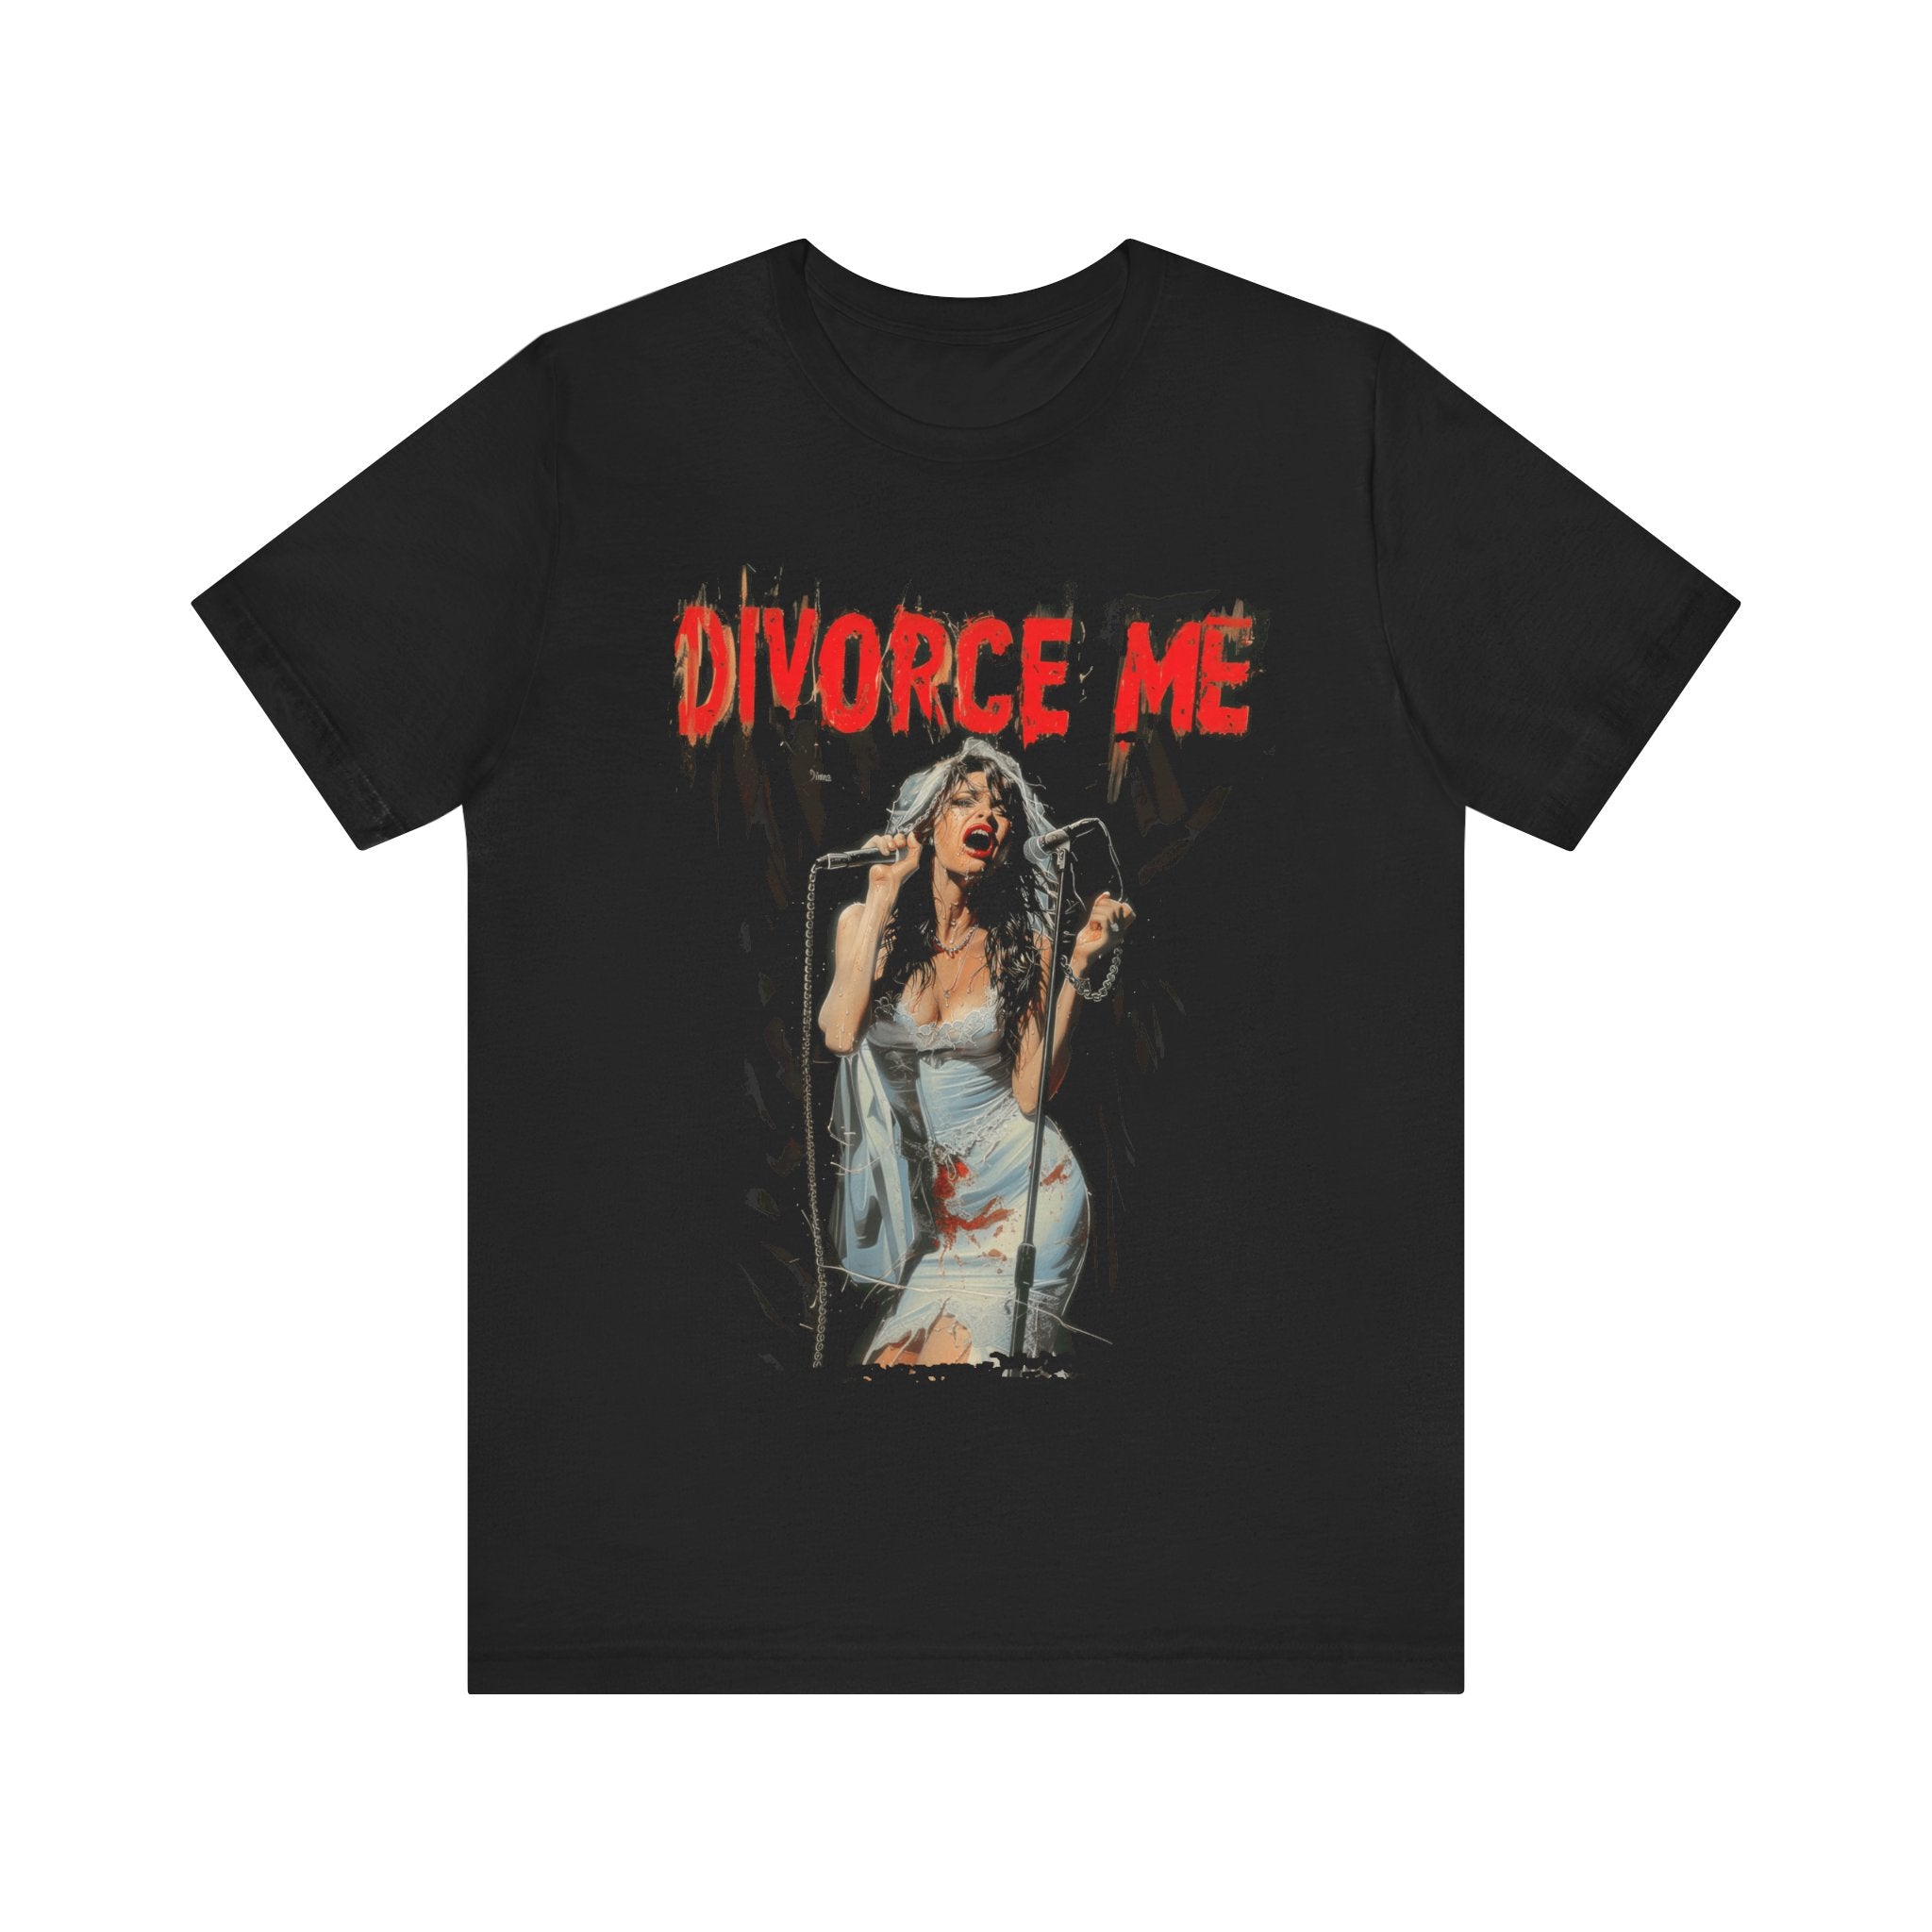 Divorce Me T-Shirt Bold Statement Graphic Tee